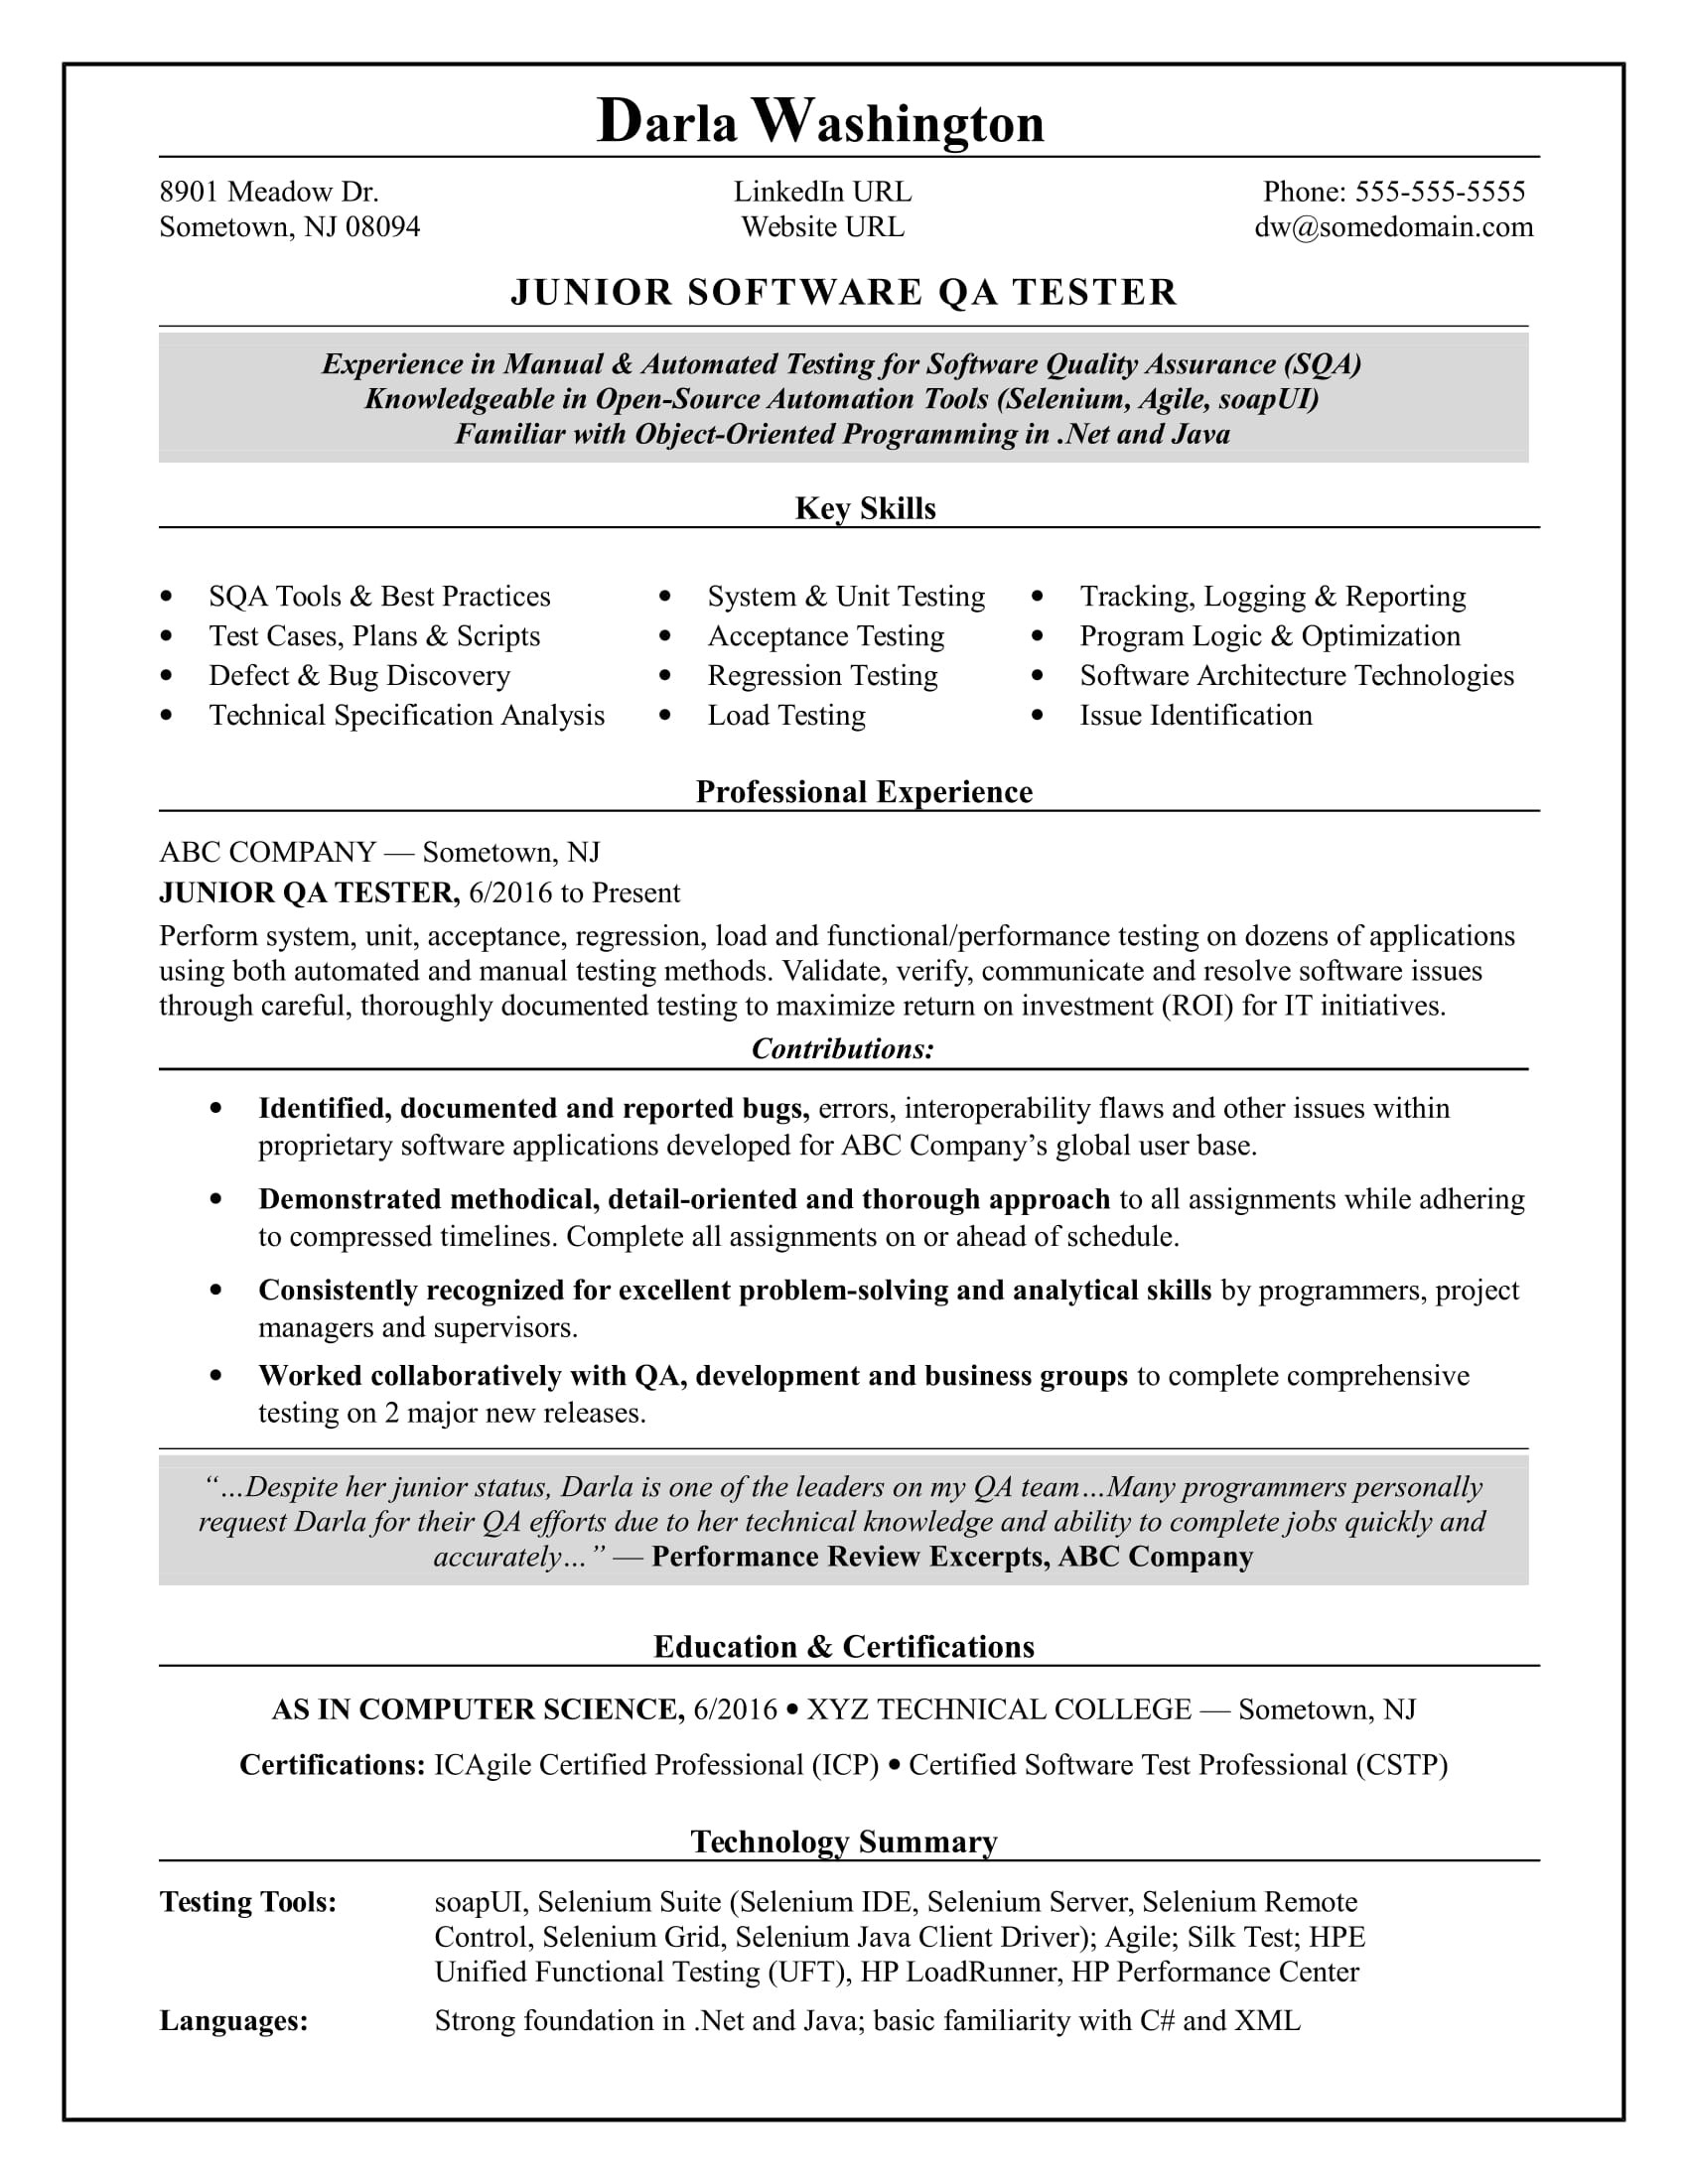 Software Testing Resume for Fresher Samples Entry-level software Tester Resume Monster.com